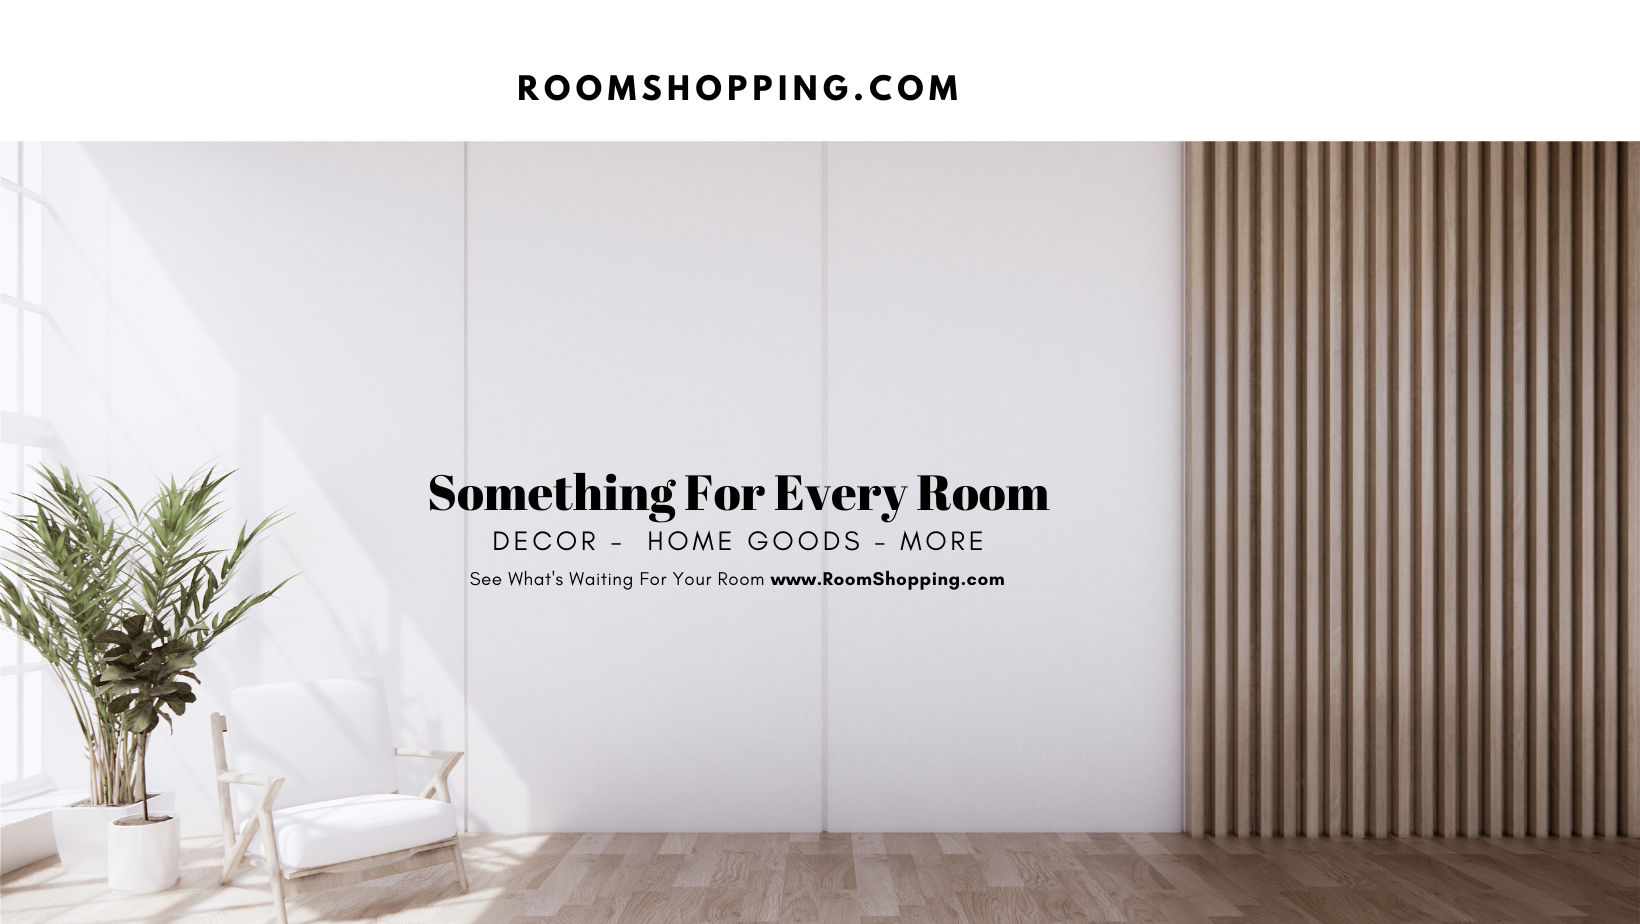 (c) Roomshopping.com